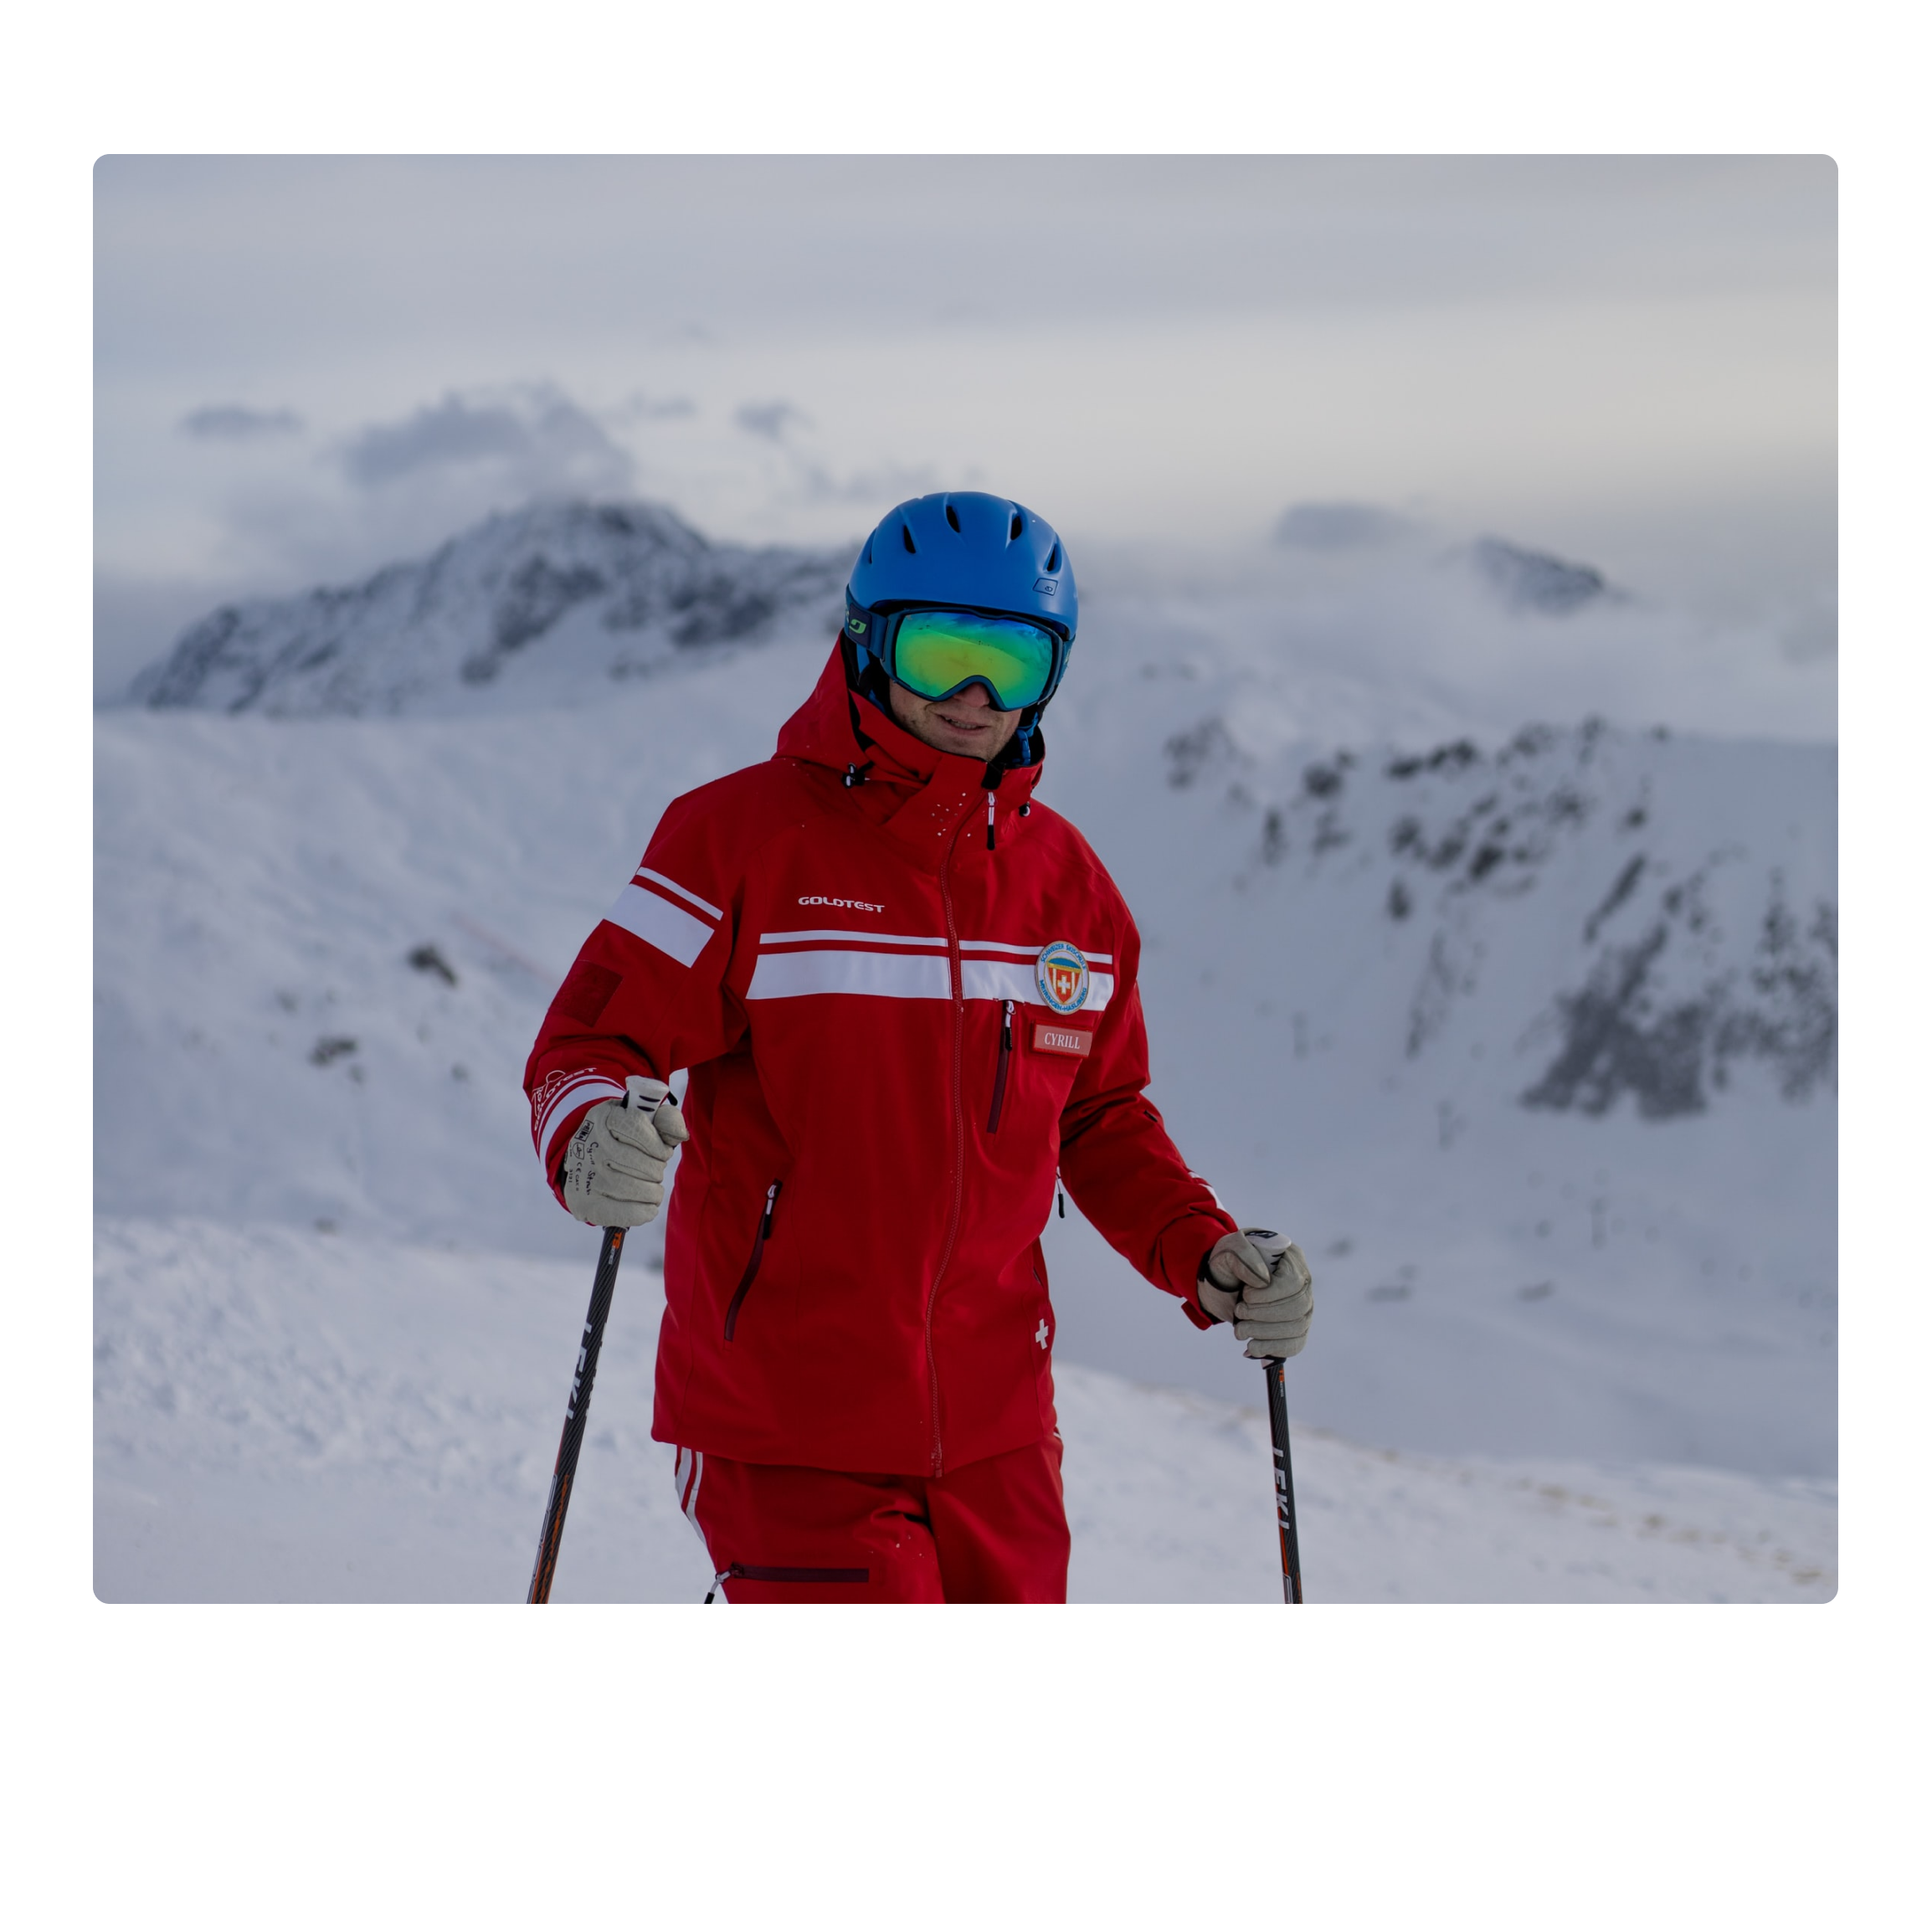 ski school instructor, skiing Austria, ski clothing rental